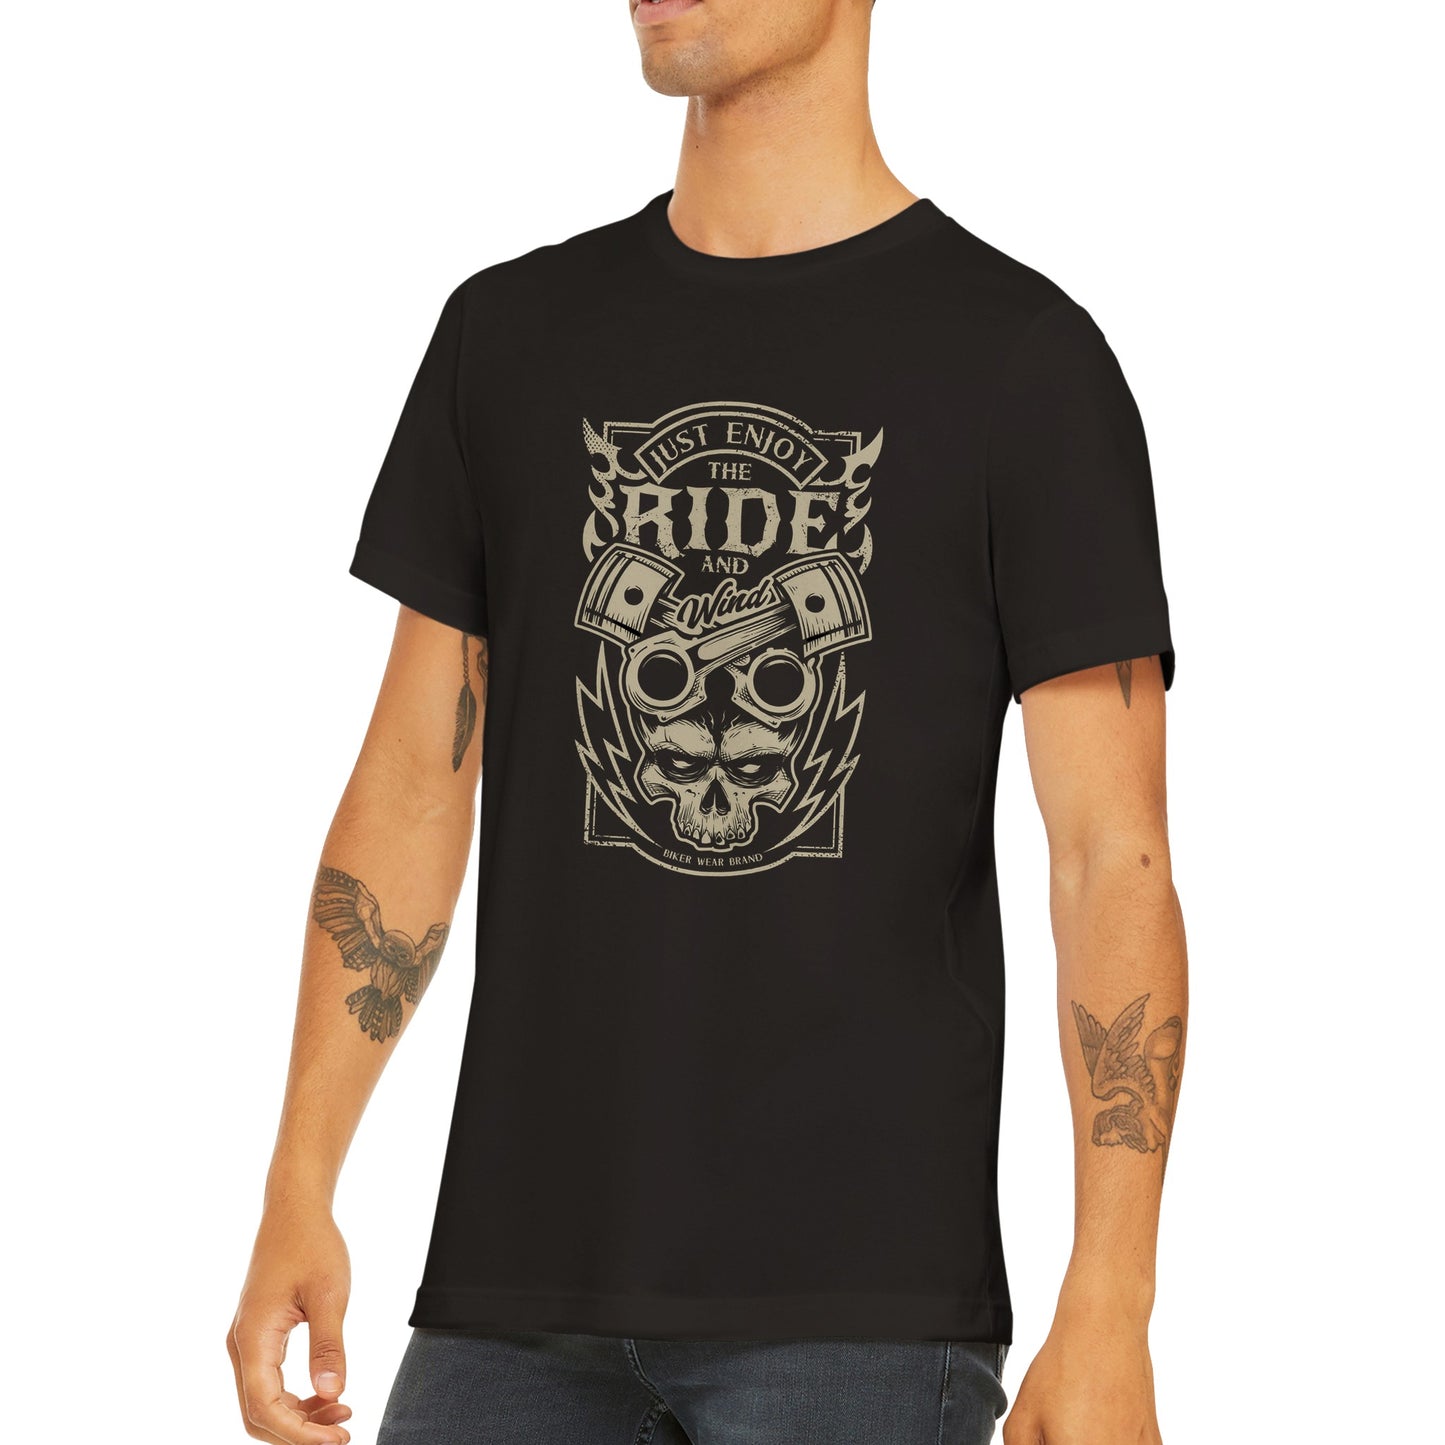 Enjoy the Ride T-shirt